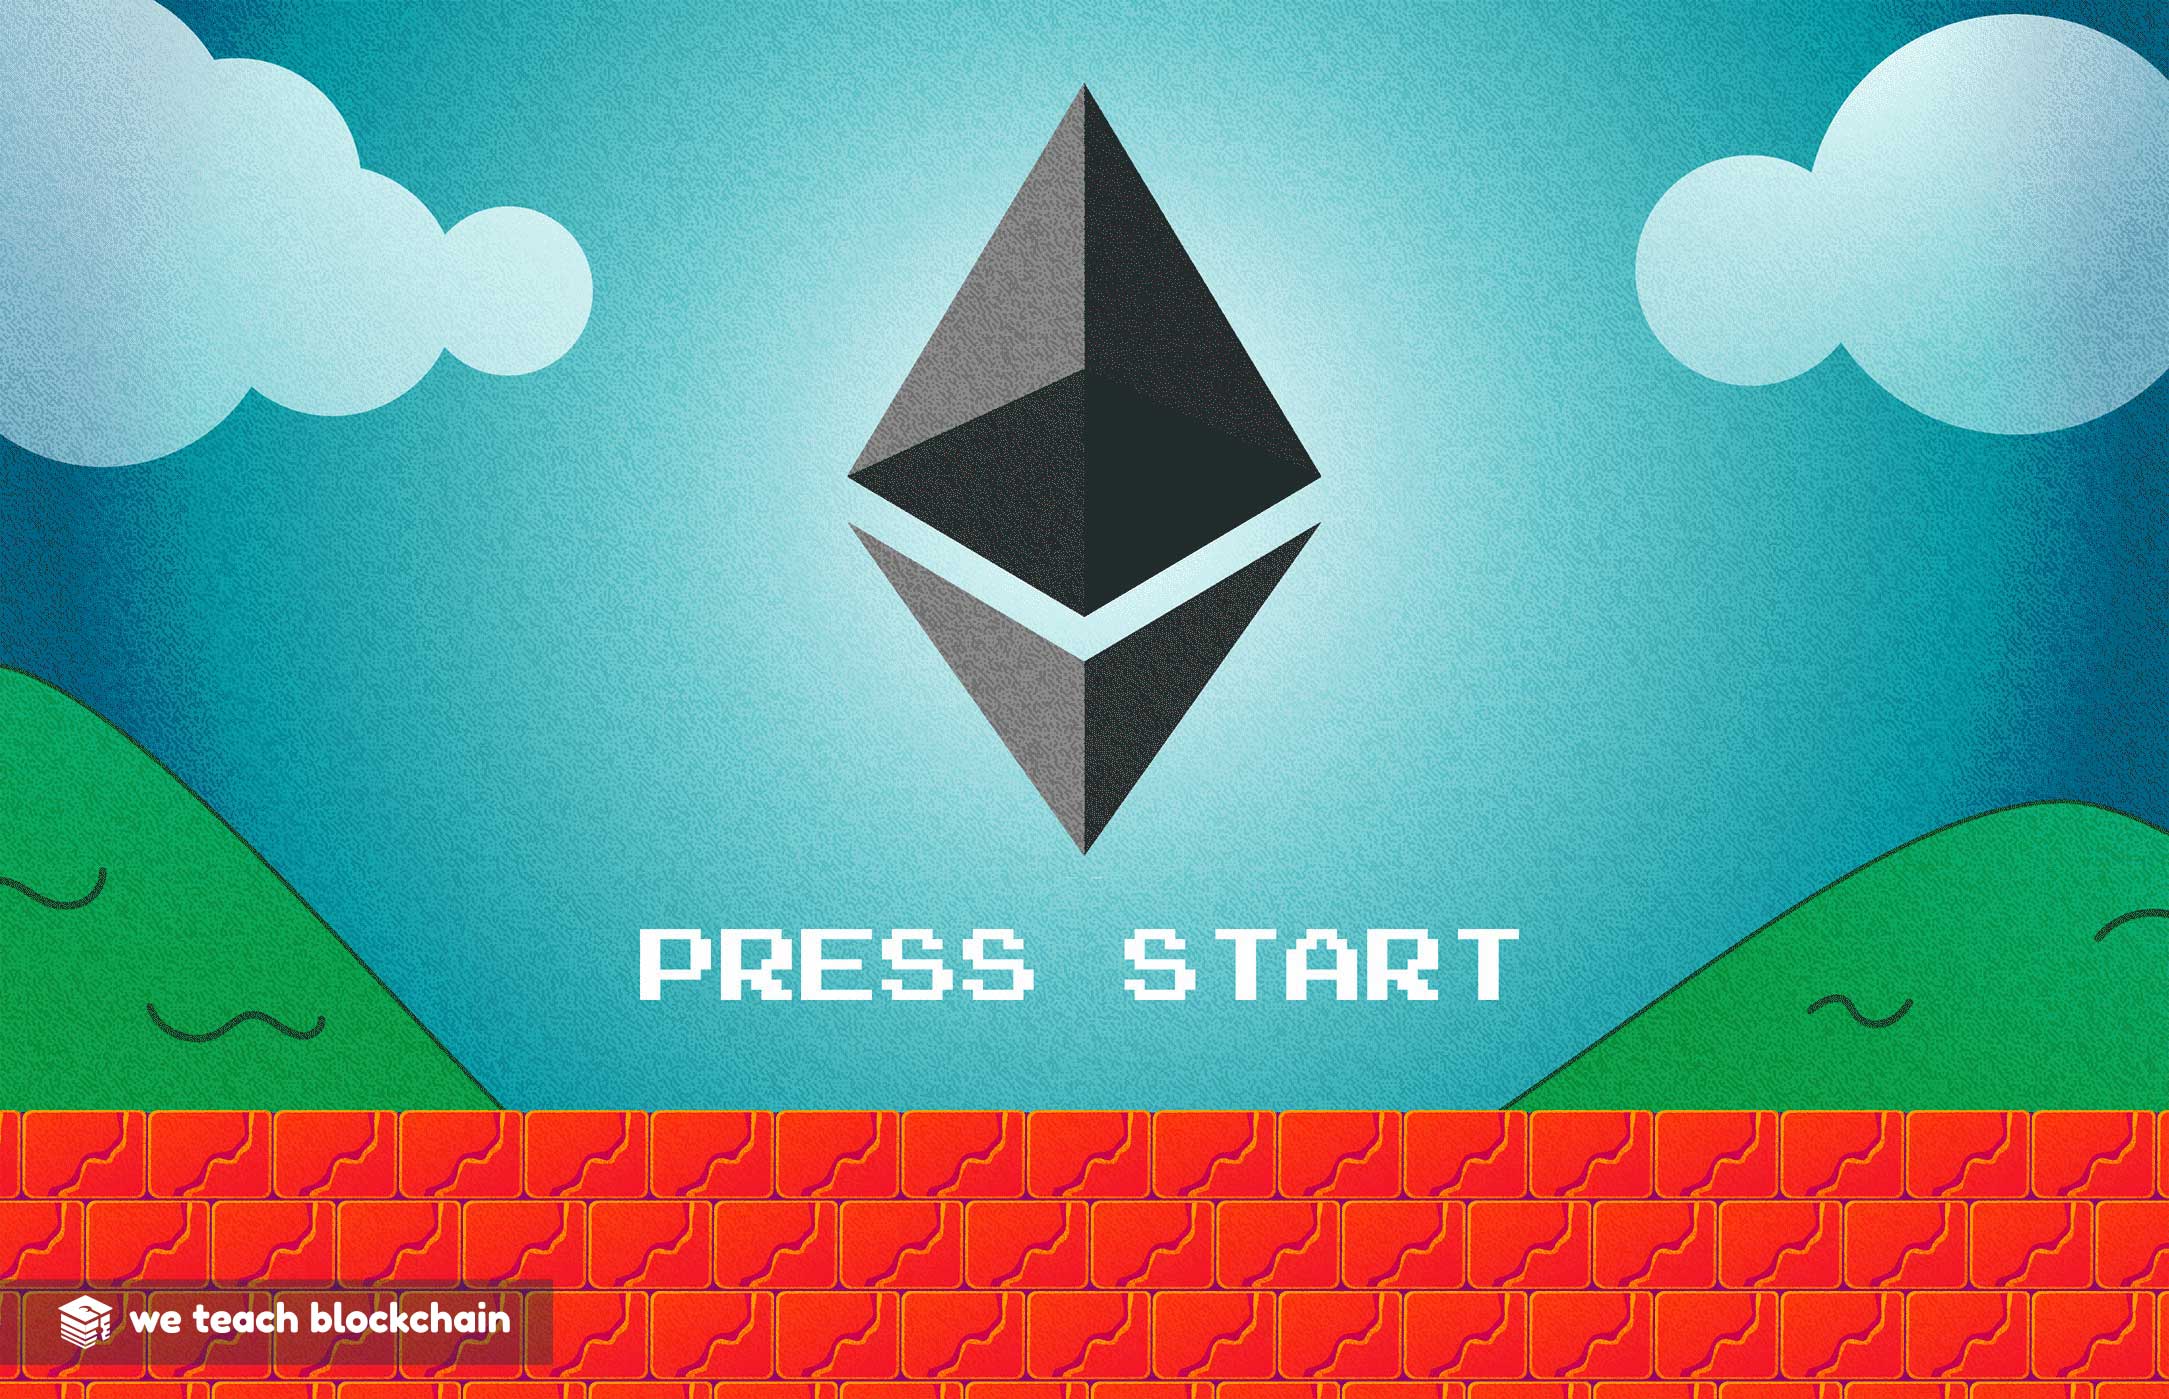 Arcade start screen with Ethereum logo